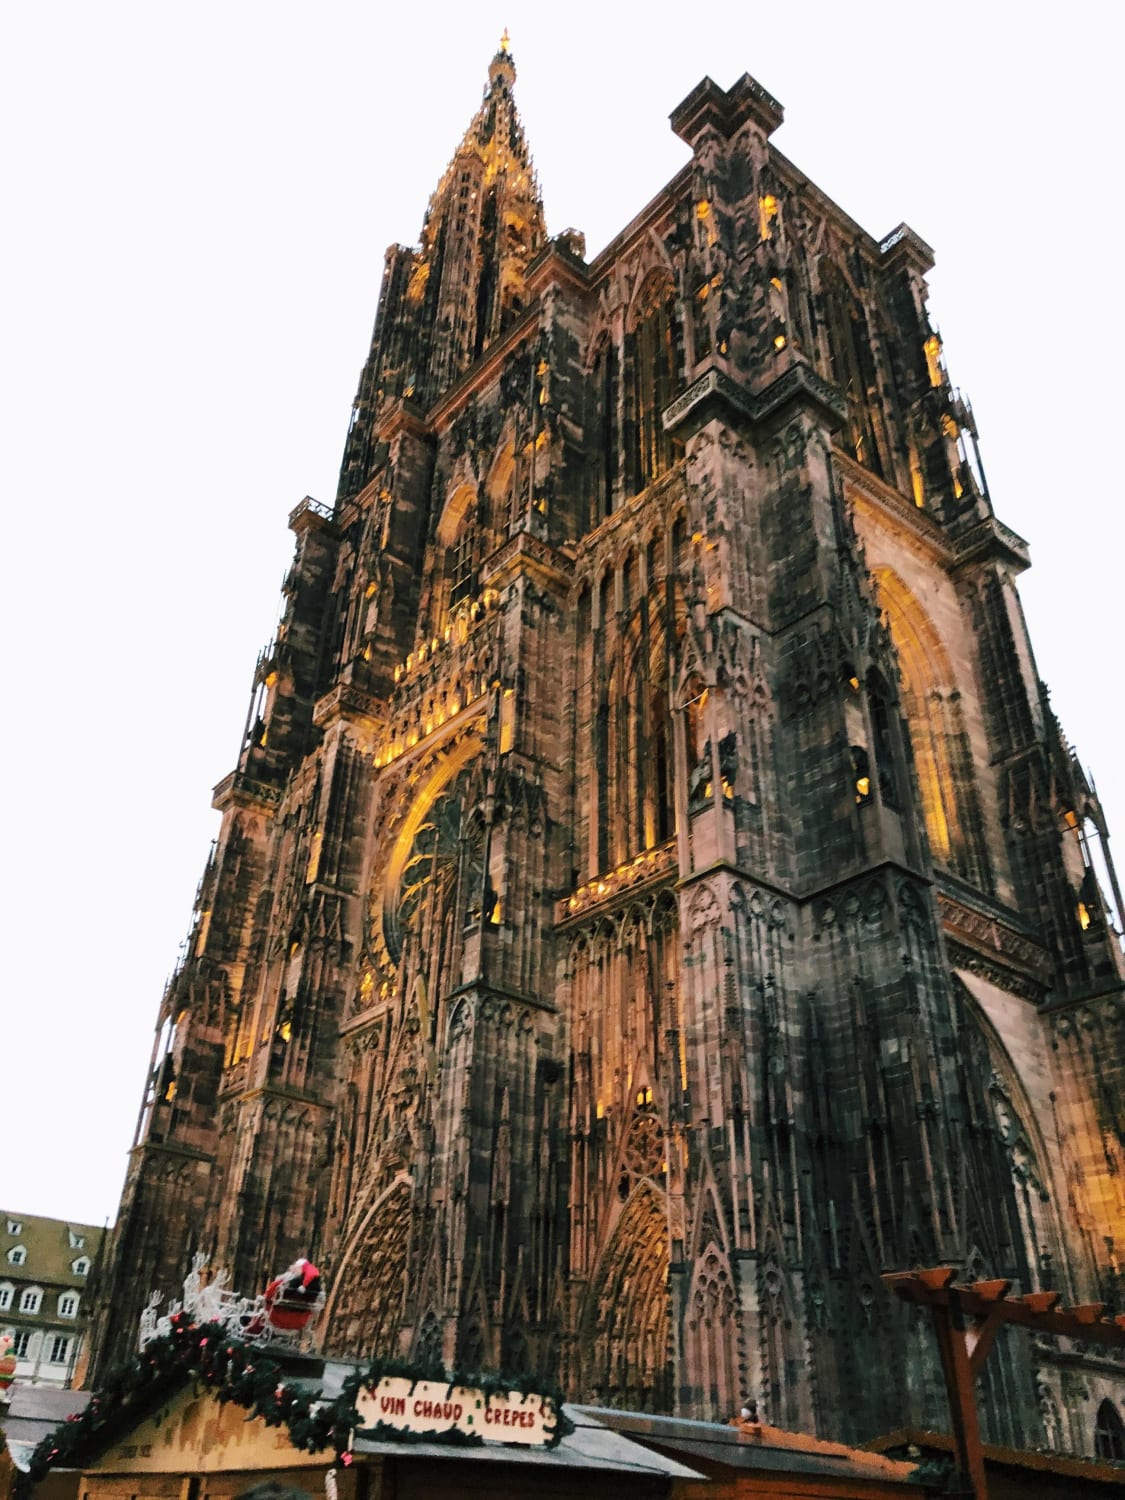 Cathédrale Notre-Dame de Strasbourg (completed in 1439)